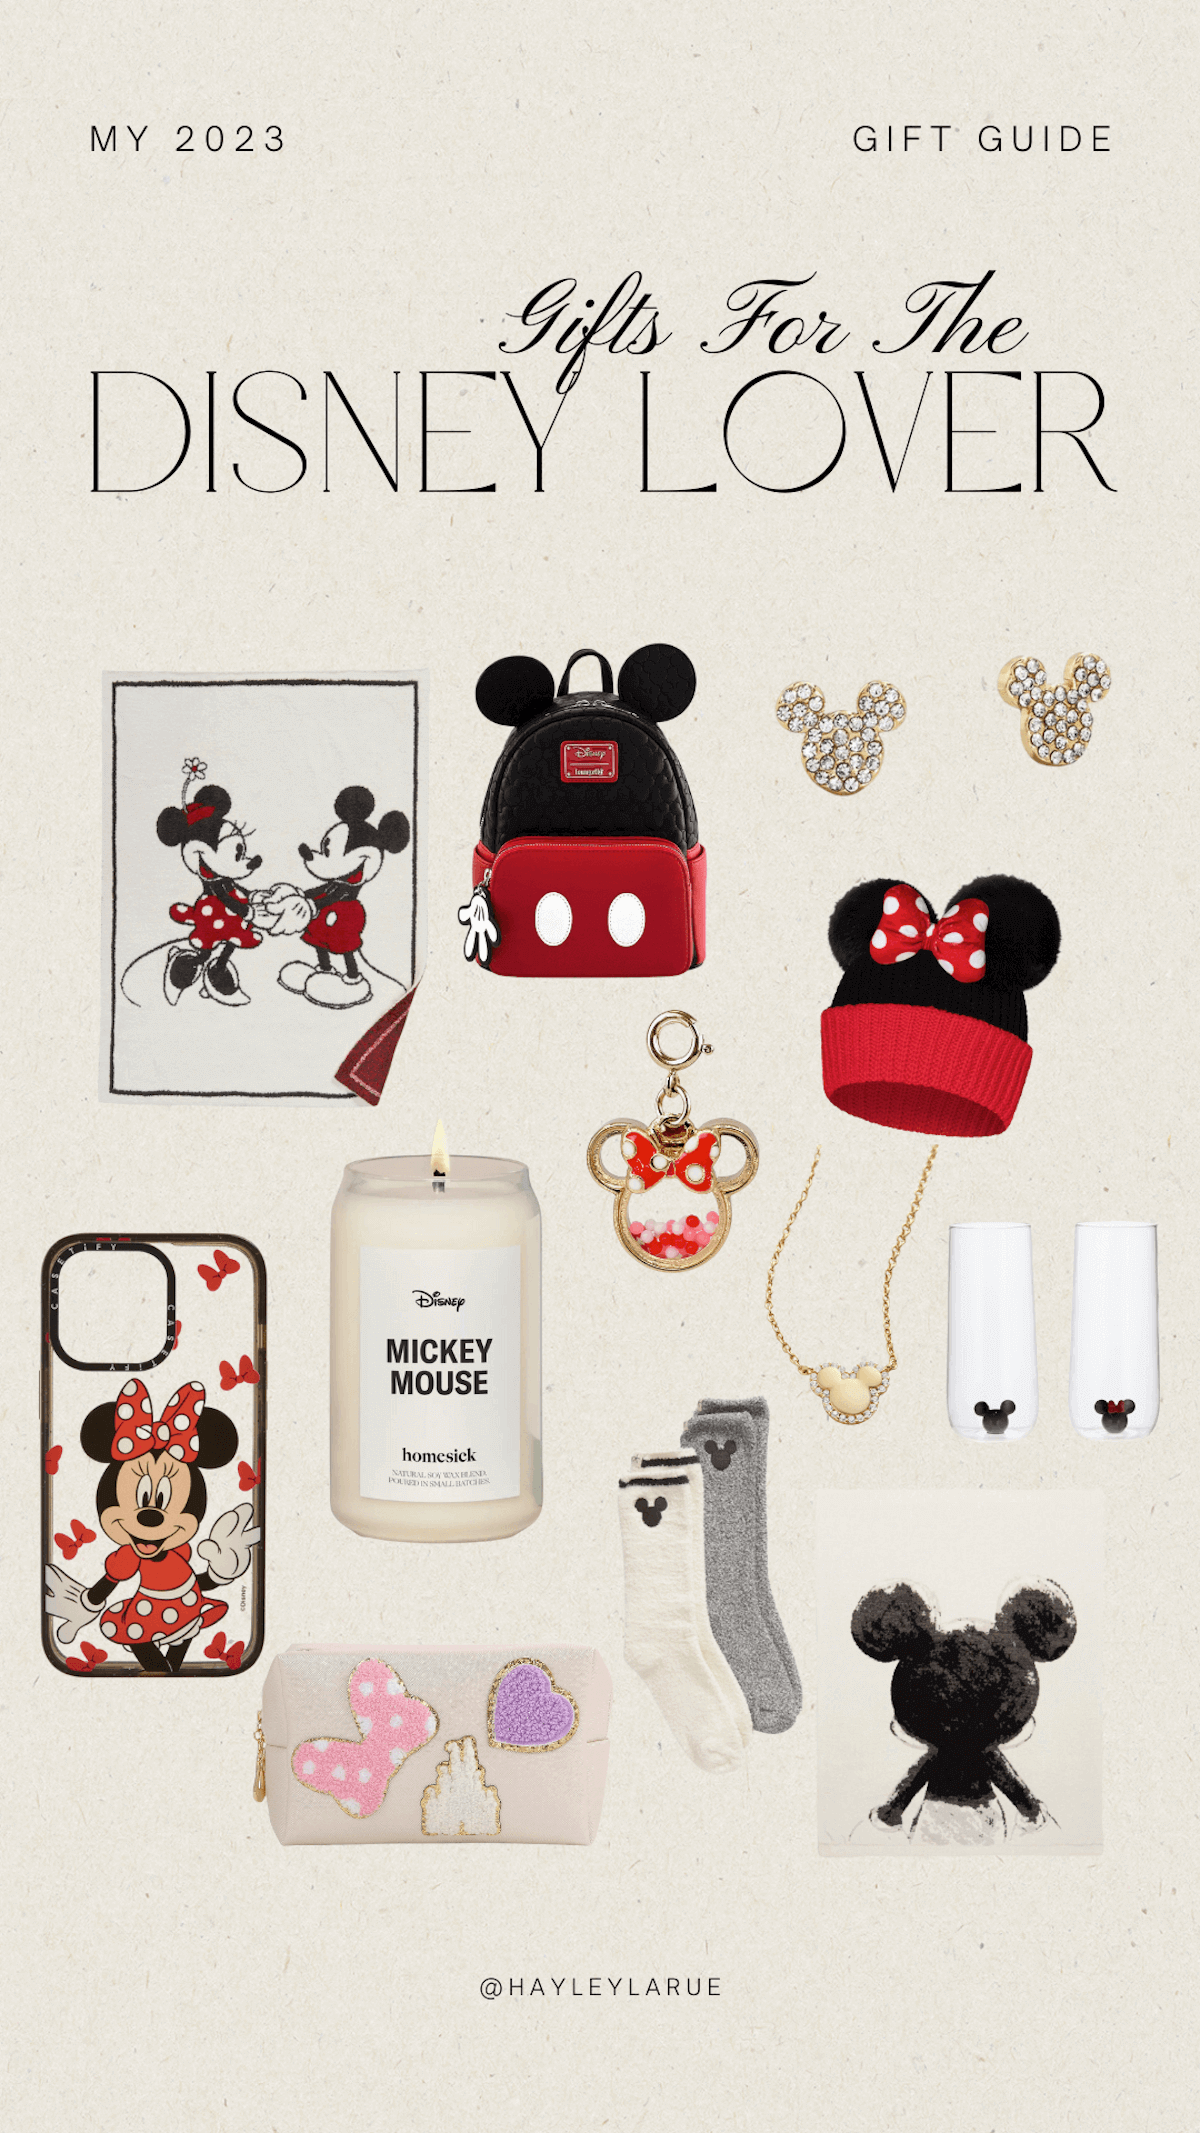 Gift Guide for The Disney Lover